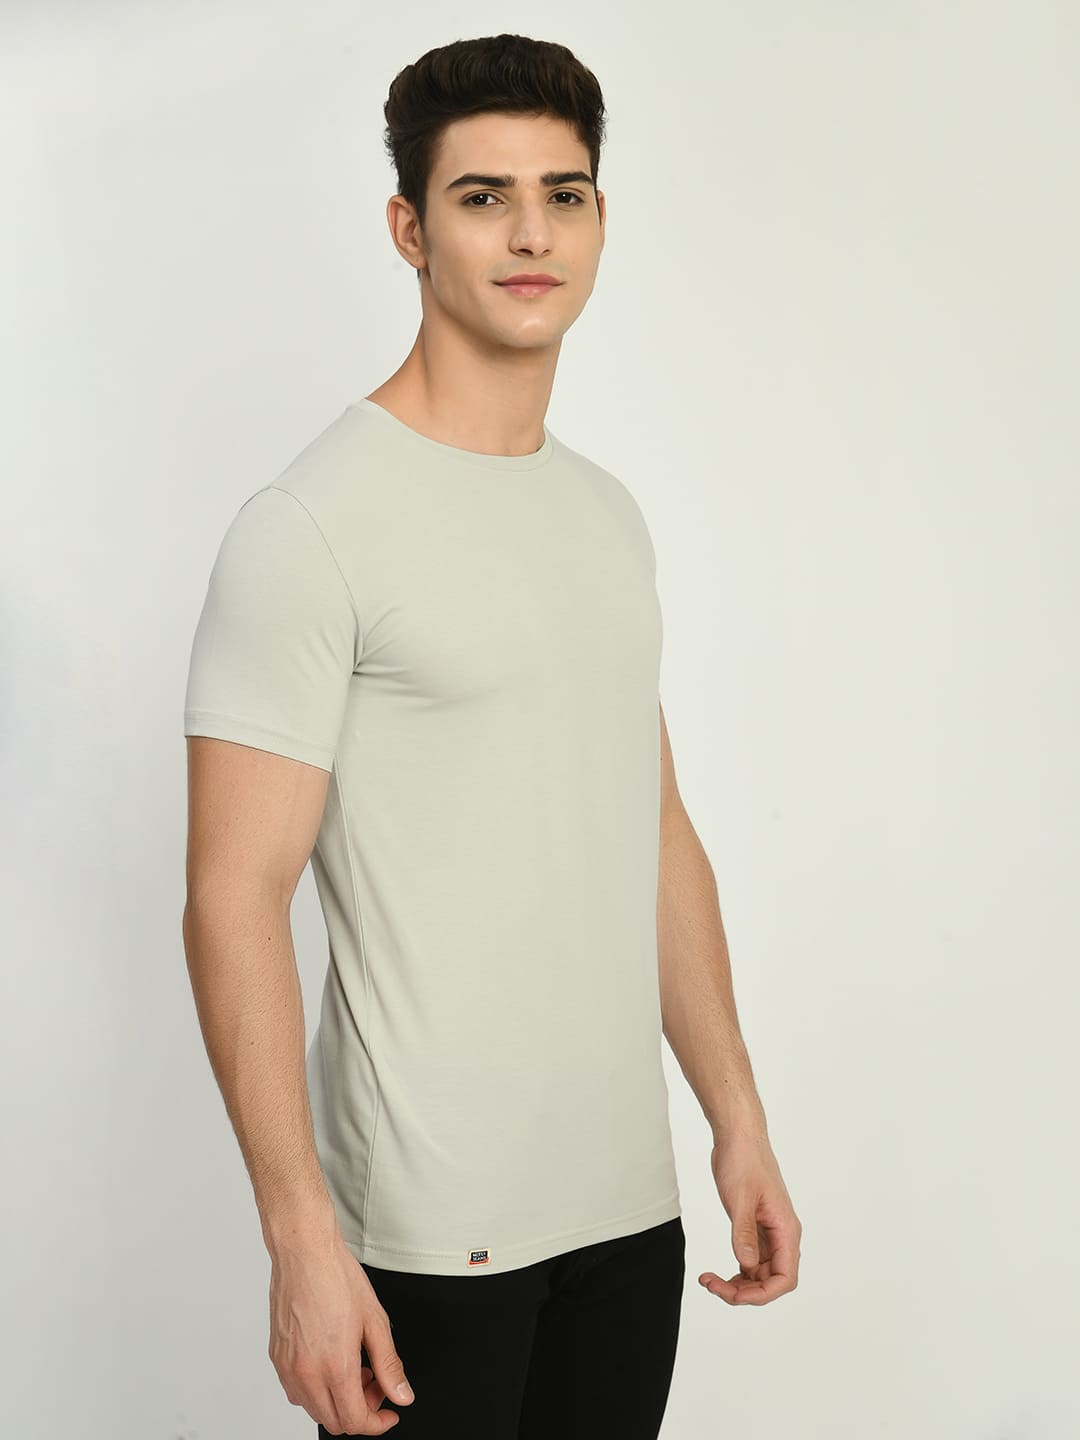 Men's Basic Gray Round Neck T-Shirt